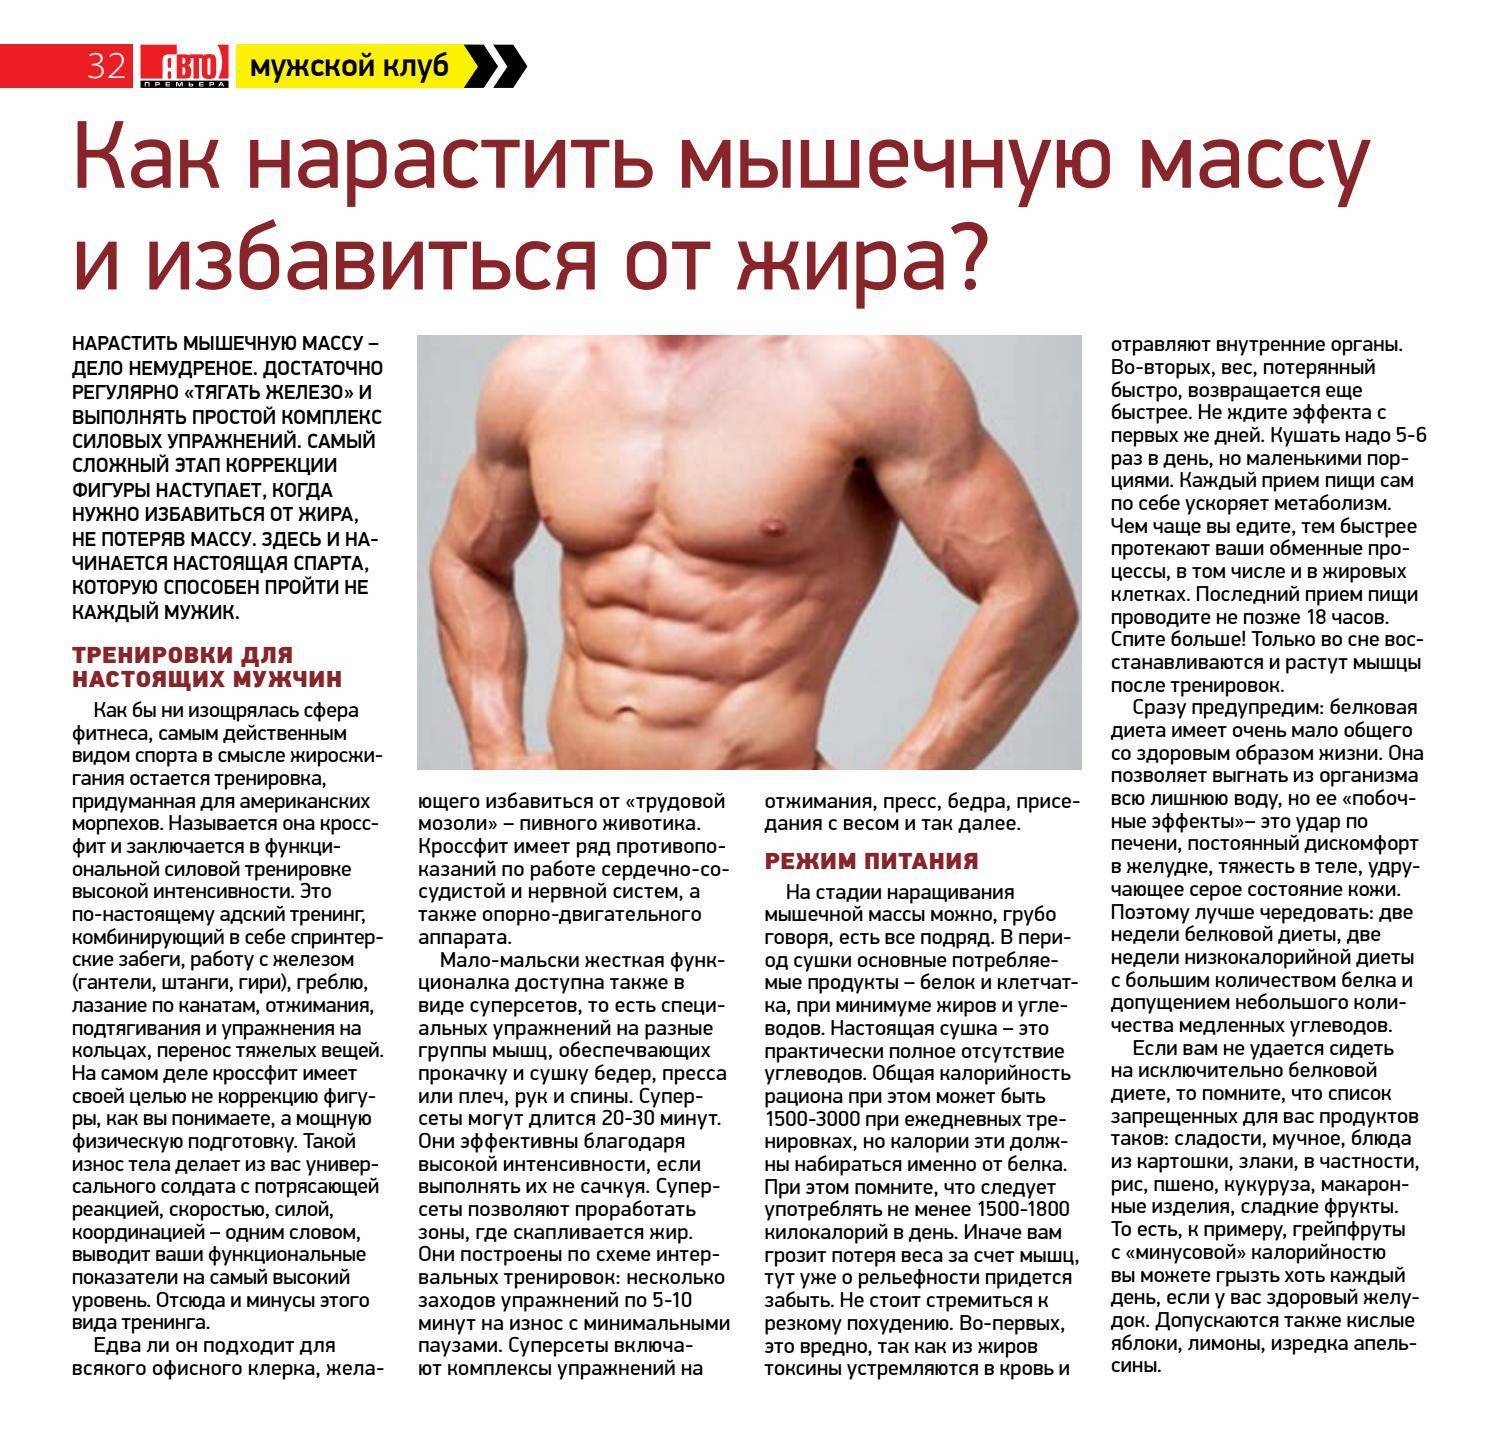 До скольки лет растут мышцы у мужчин? условия для роста мышц - tony.ru